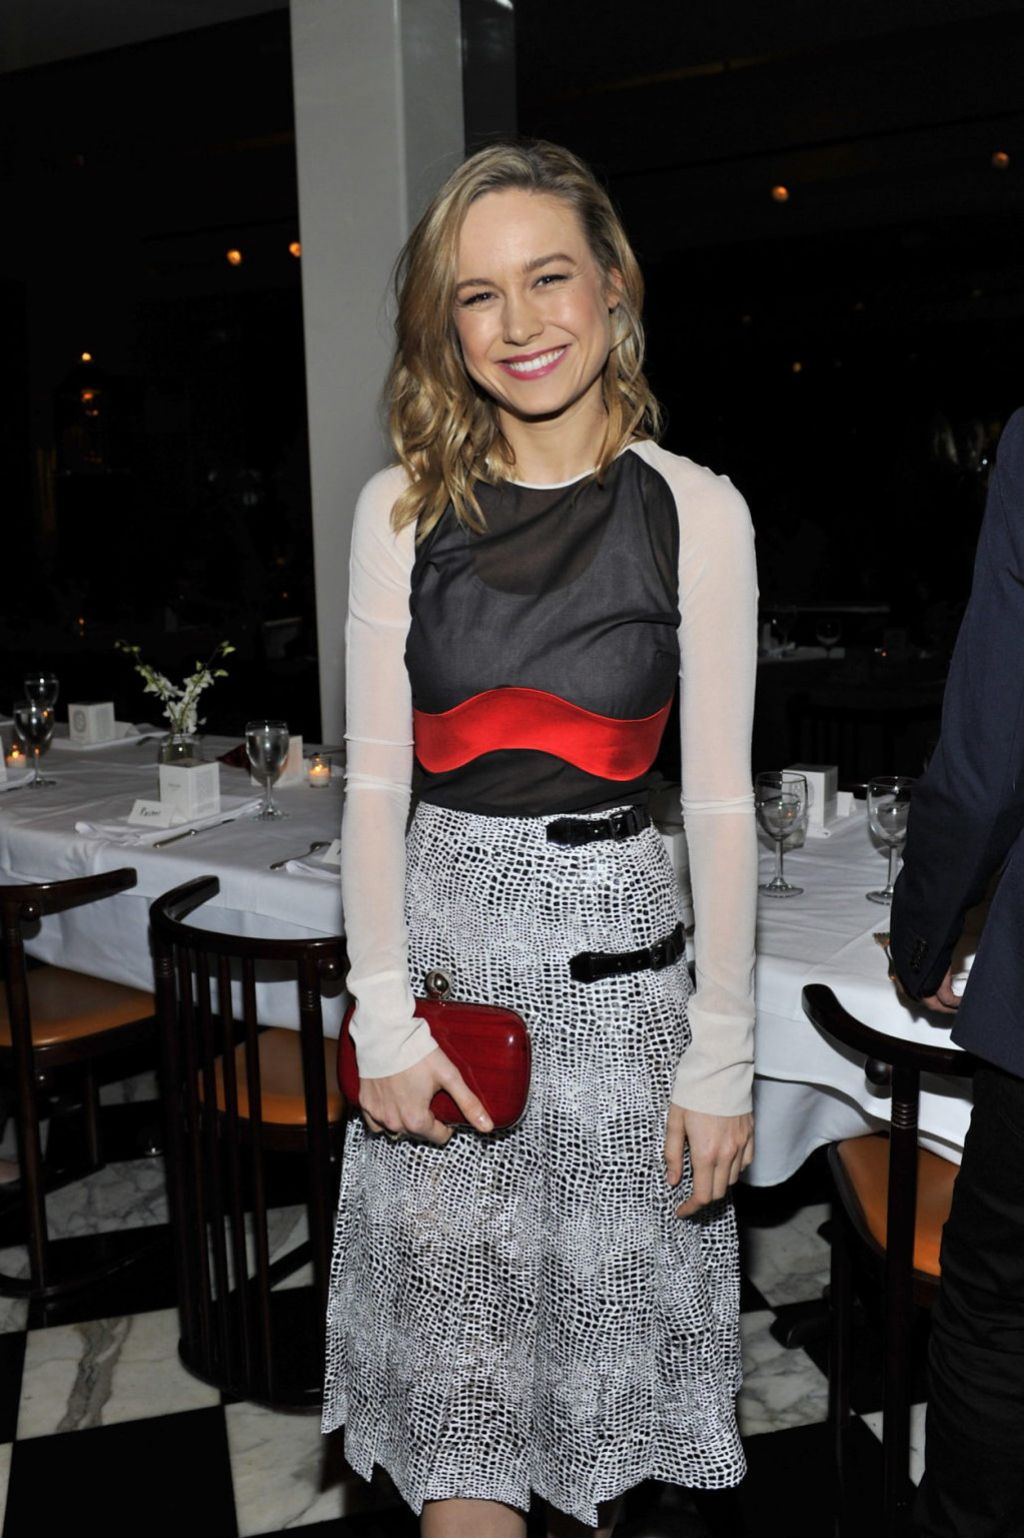 Brie Larson at Private Antonio Berardi Dinner – Beverly Hills, January 2014